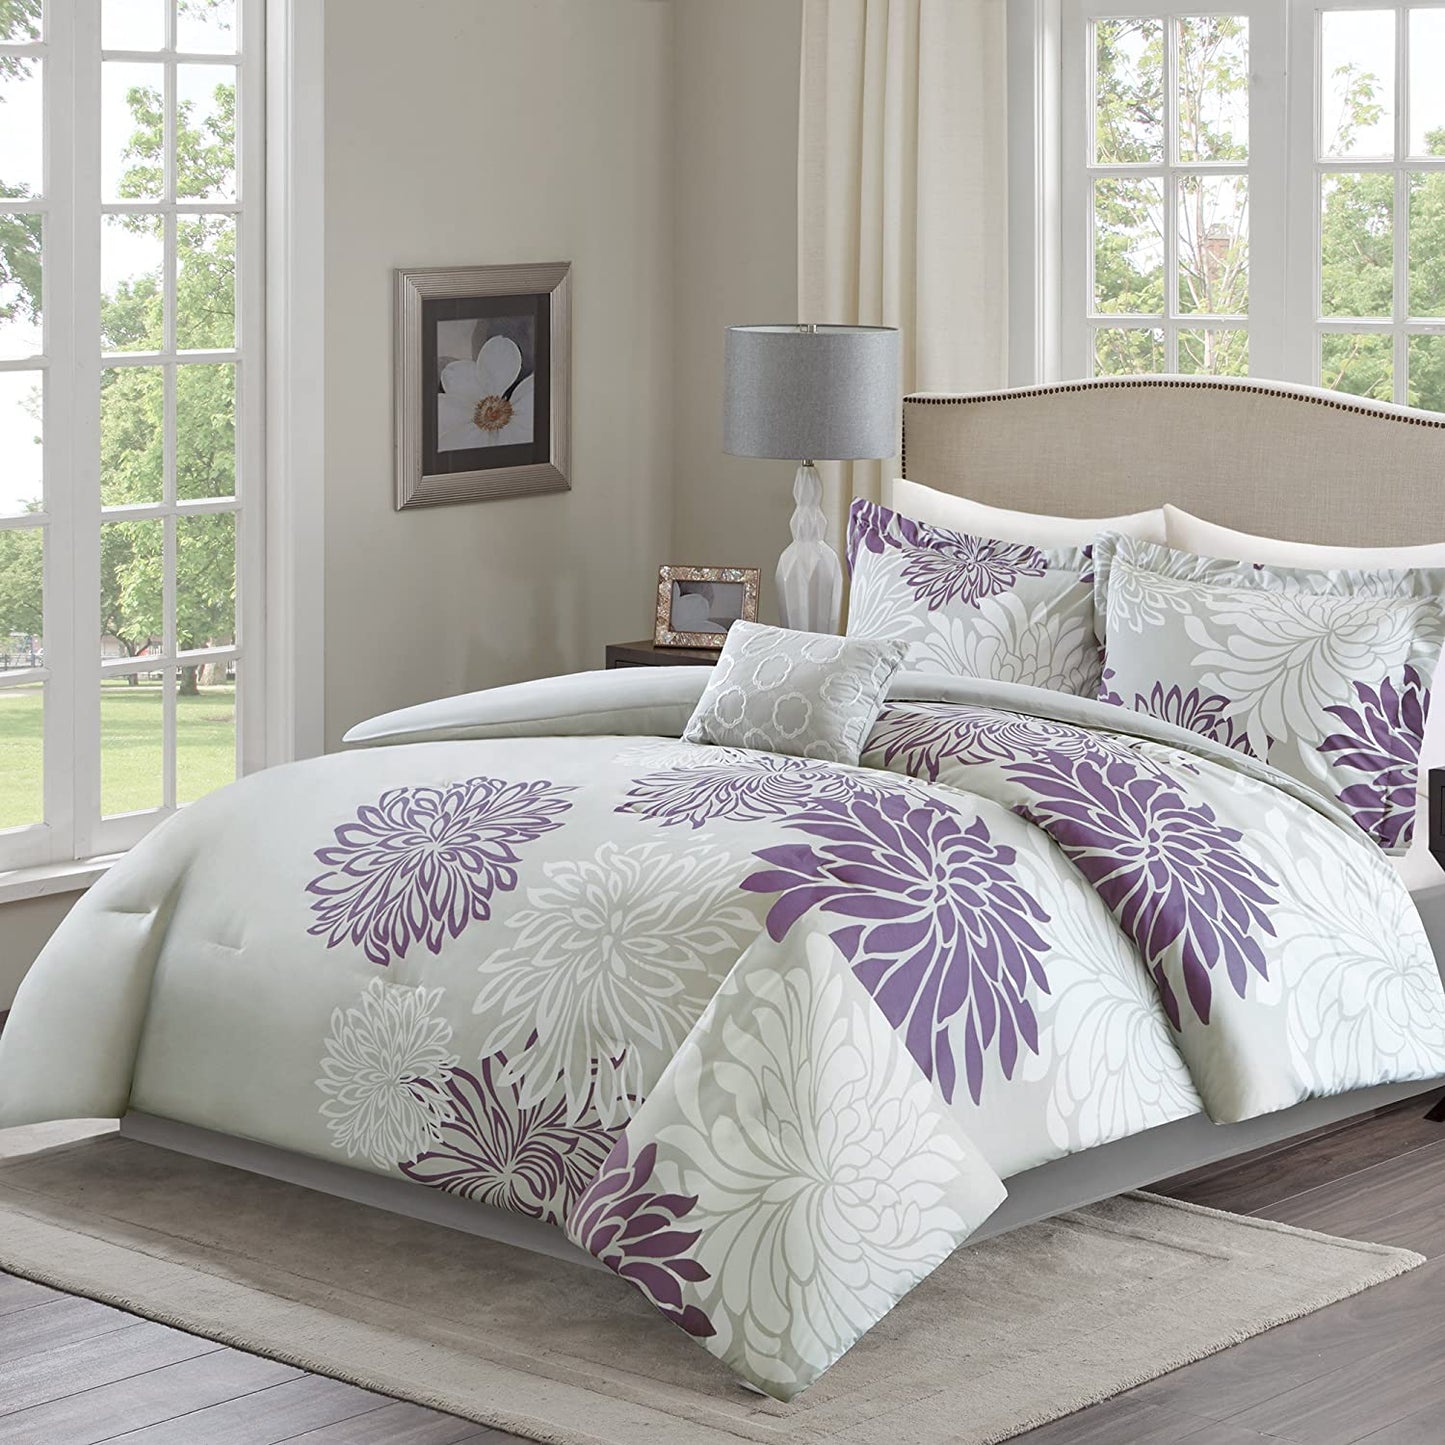 WONGS BEDDING Modern Floral Design 5 Pieces Comforter Set